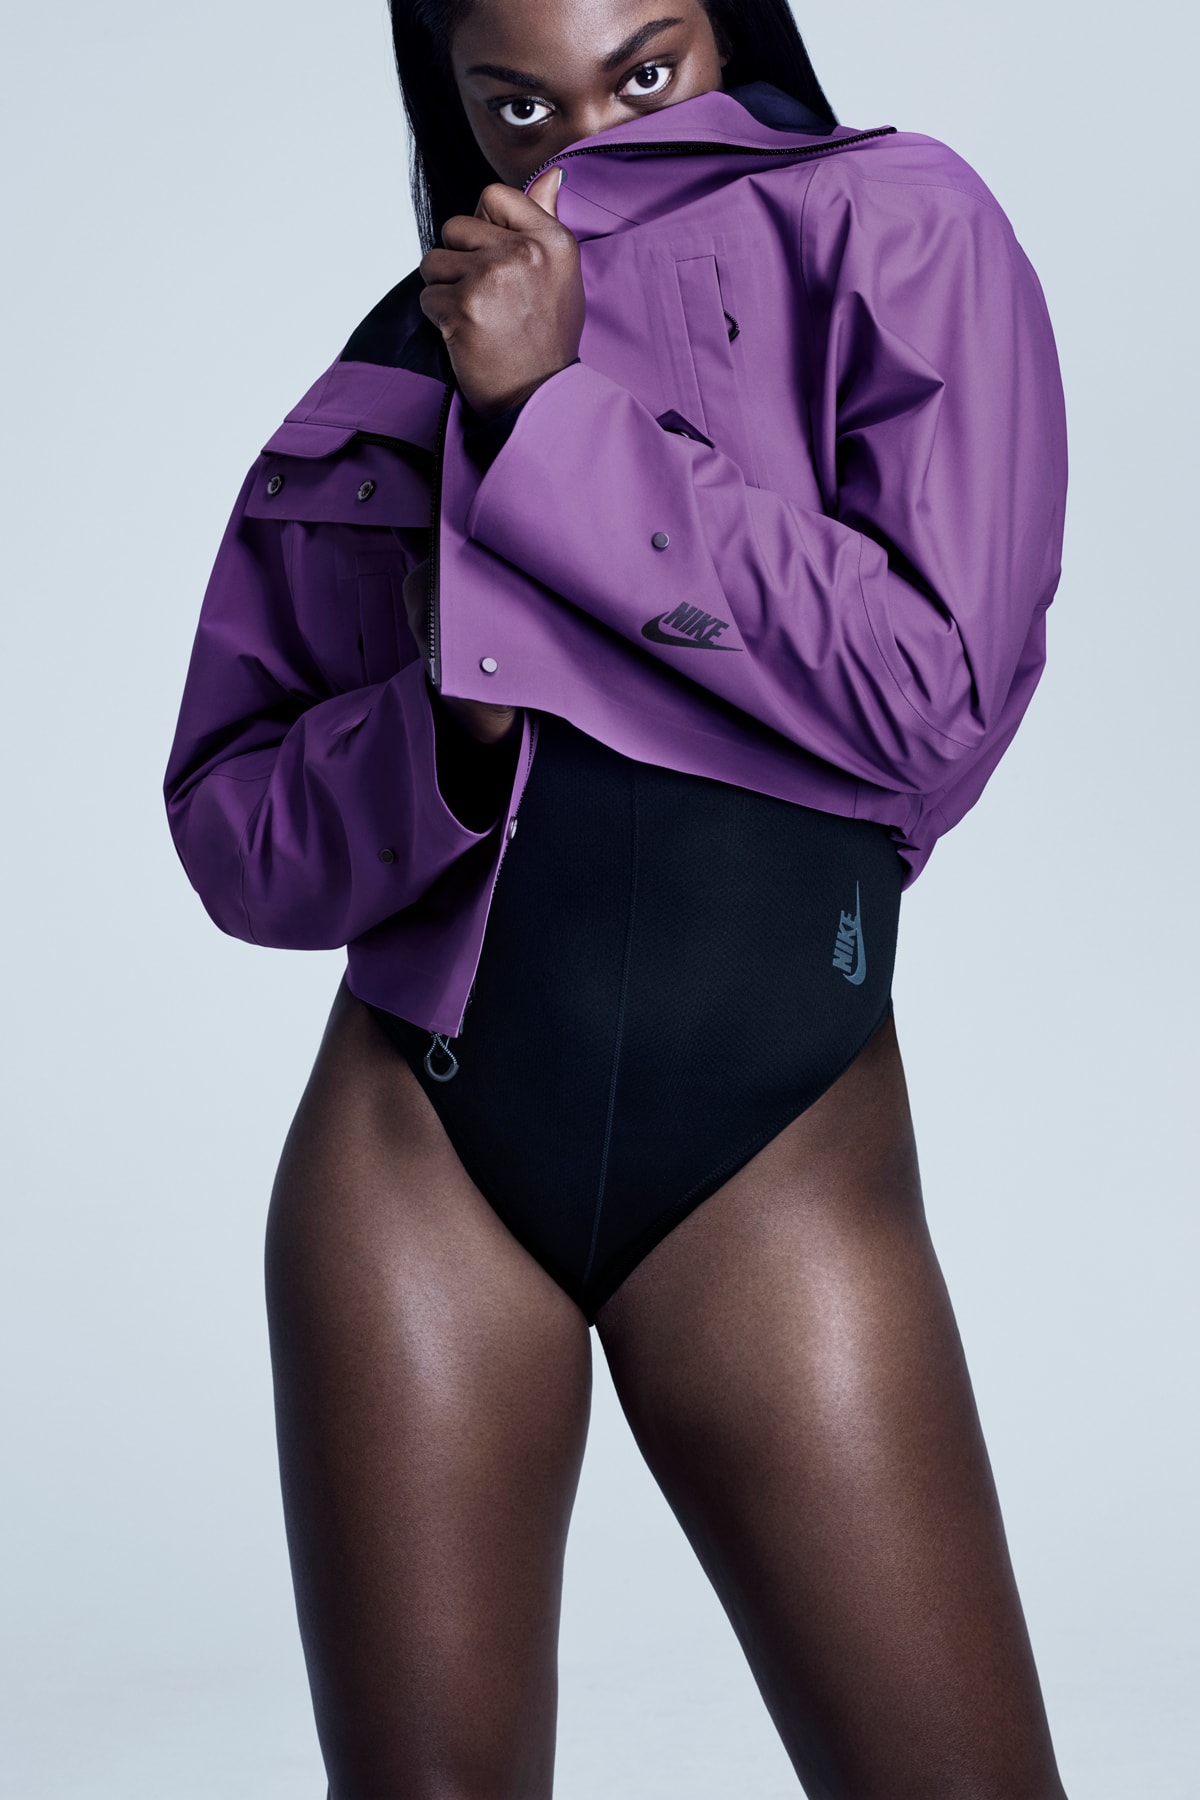 Nike City Ready Collection Campaign Sloane Stephens Bodysuit Black Crop Jacket Purple